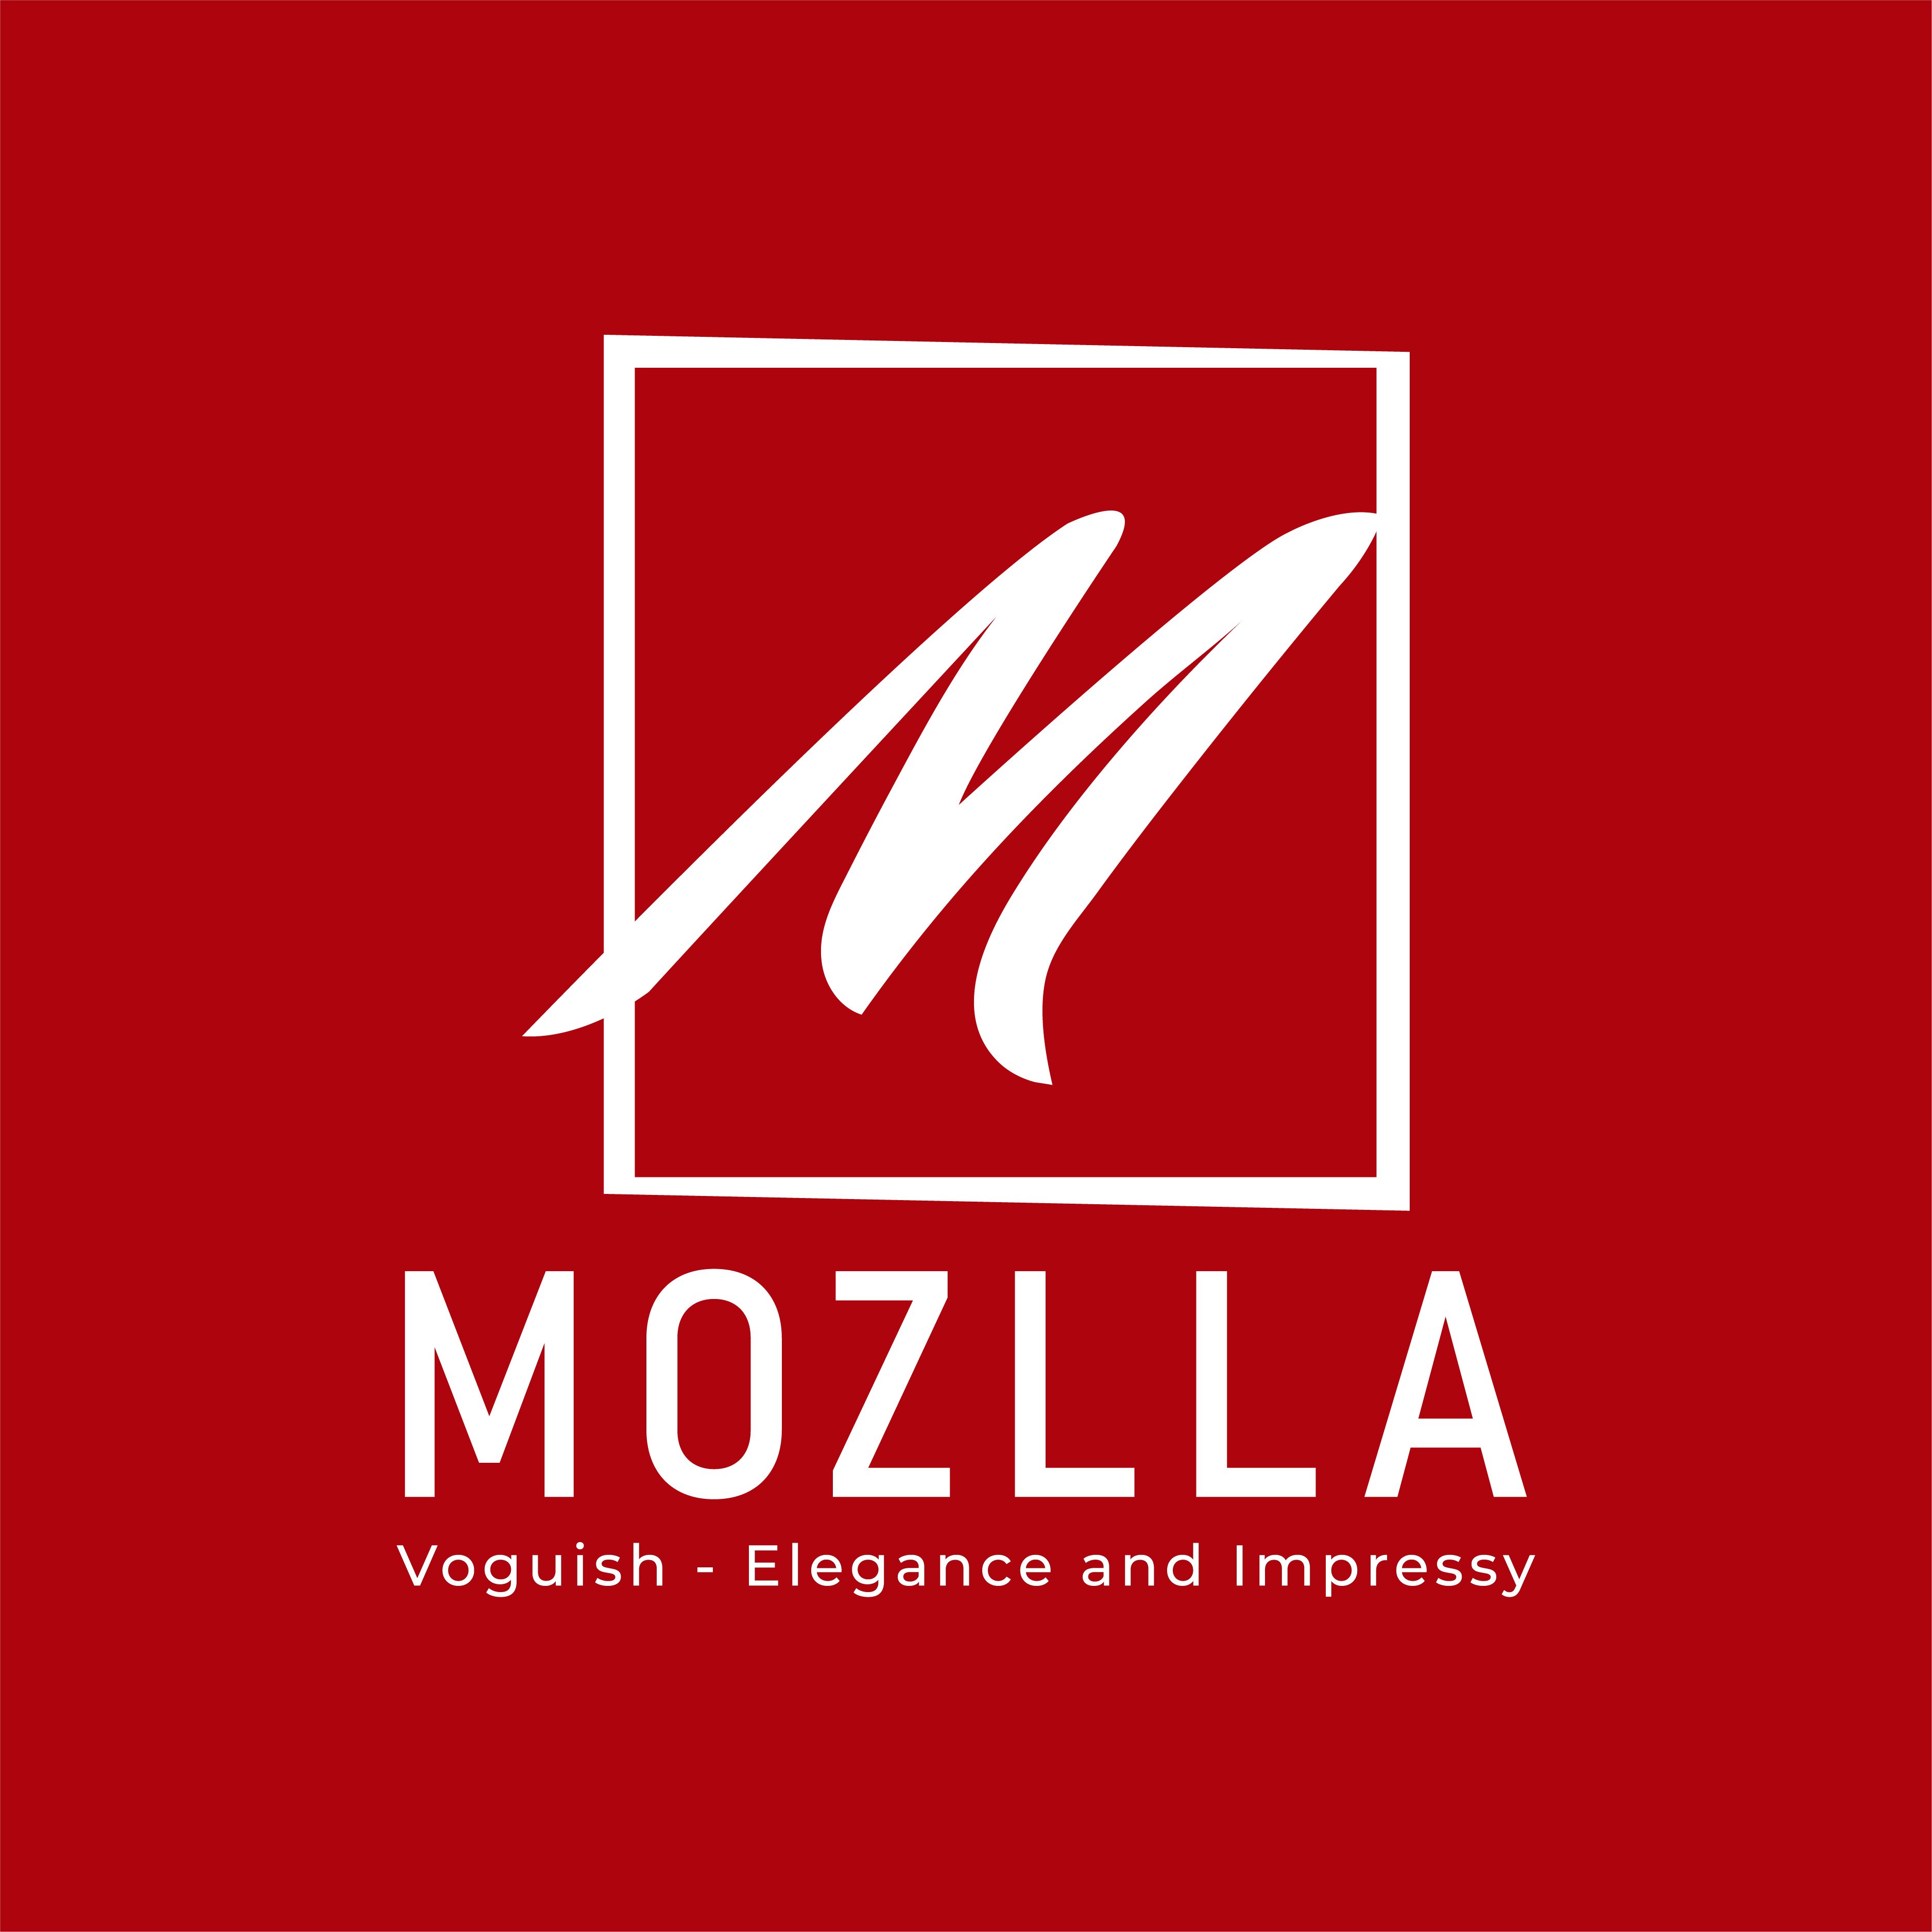 Mozlla' Design